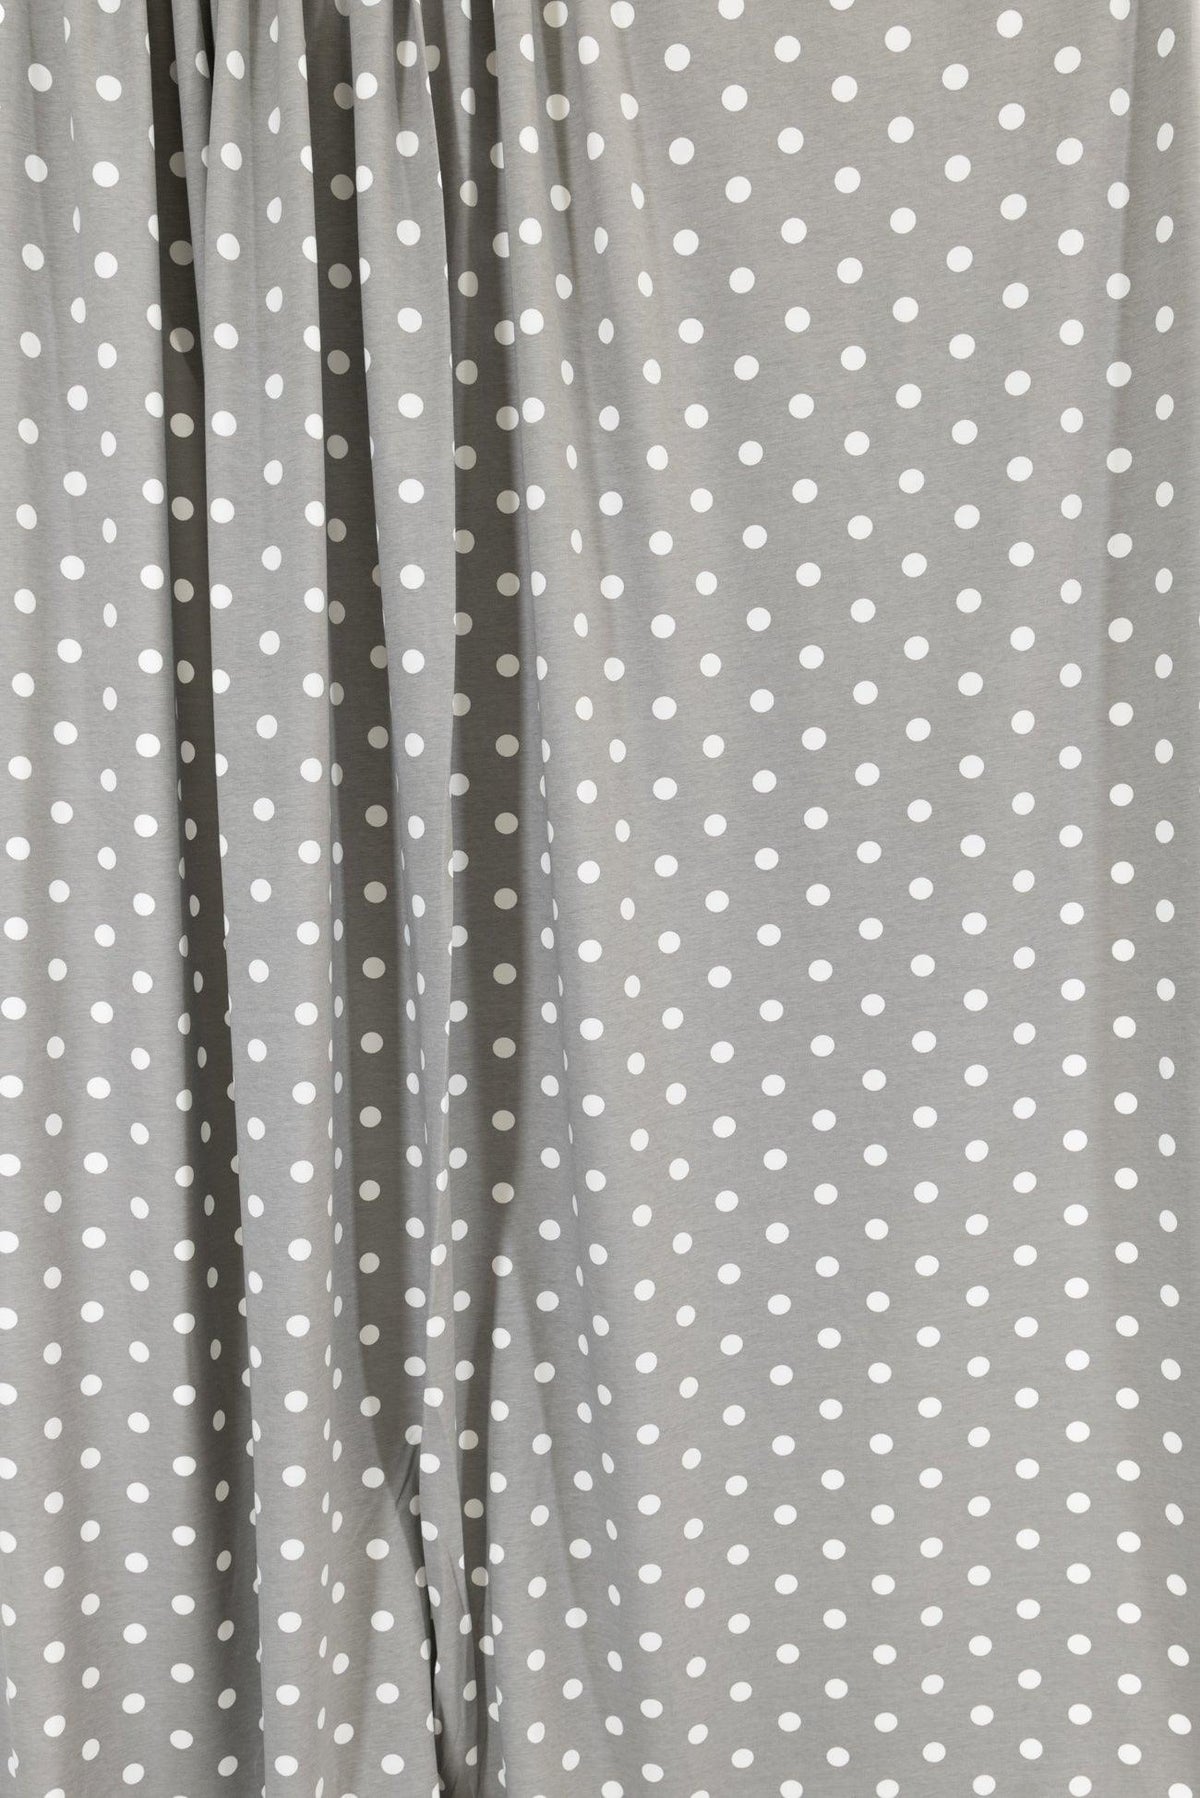 Dove Gray Dots Cotton/Spandex Knit